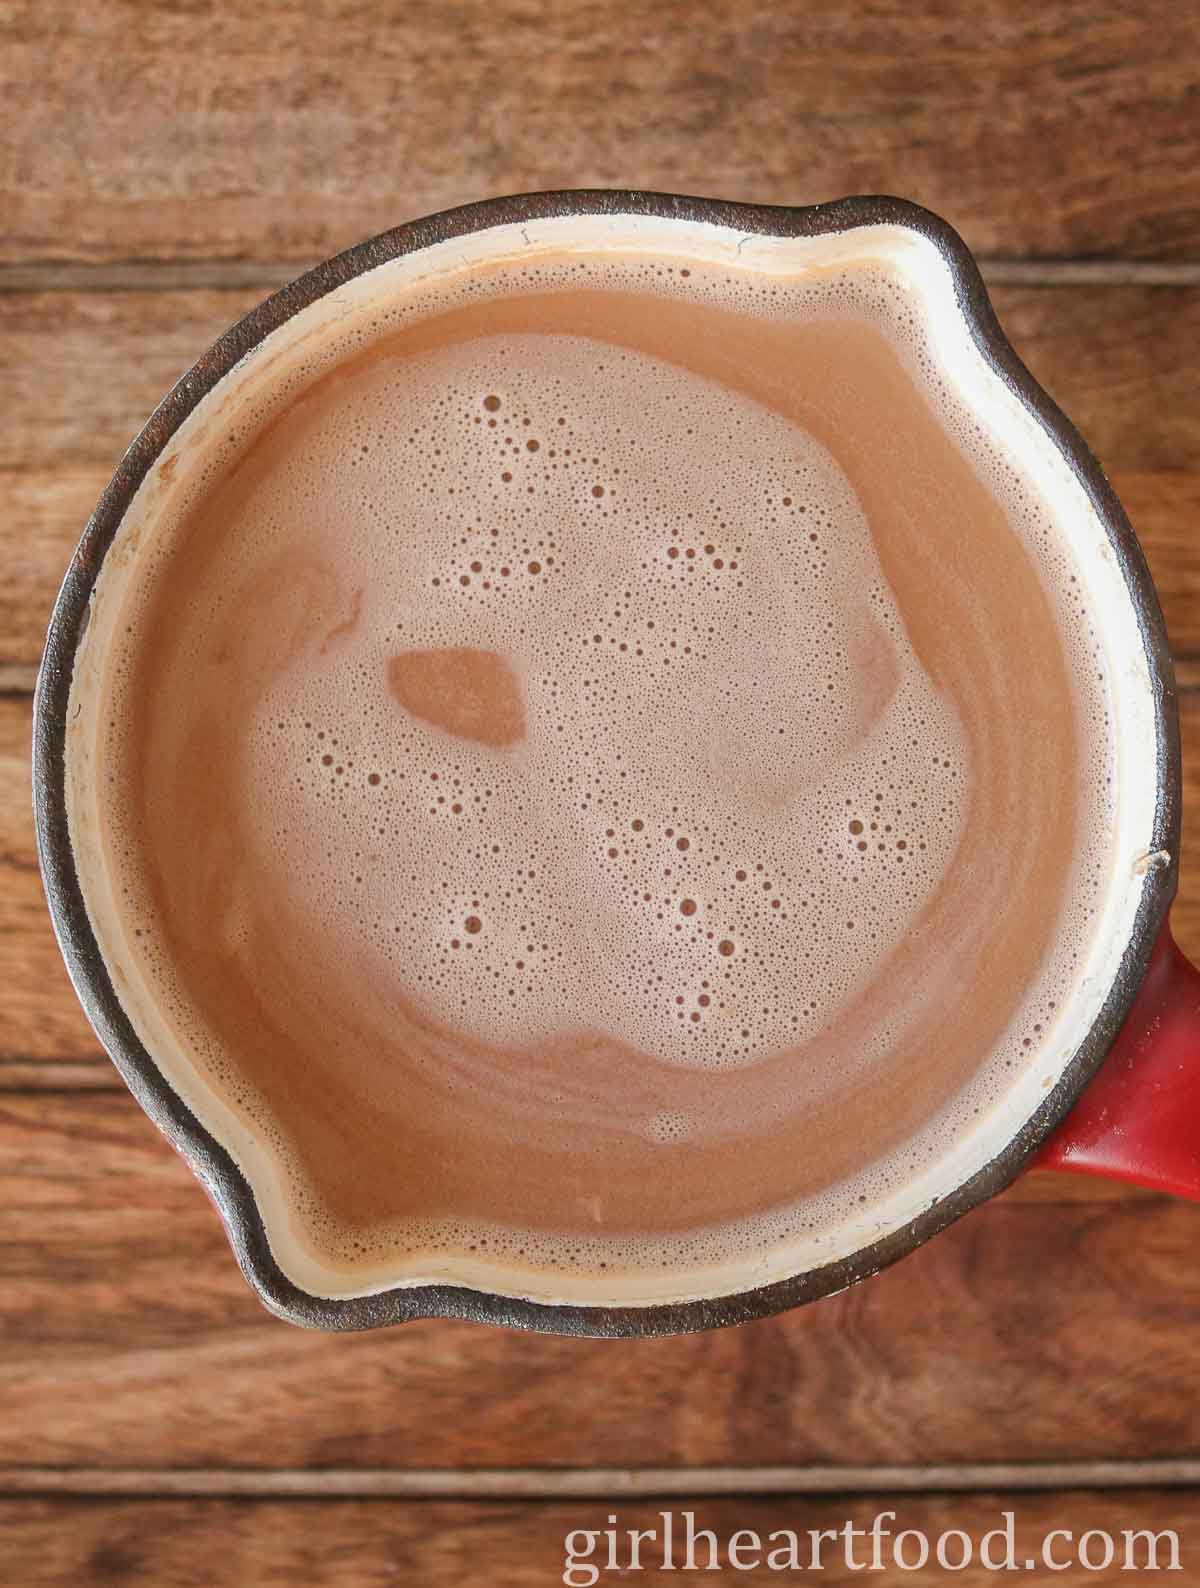 Hot chocolate in a saucepan.